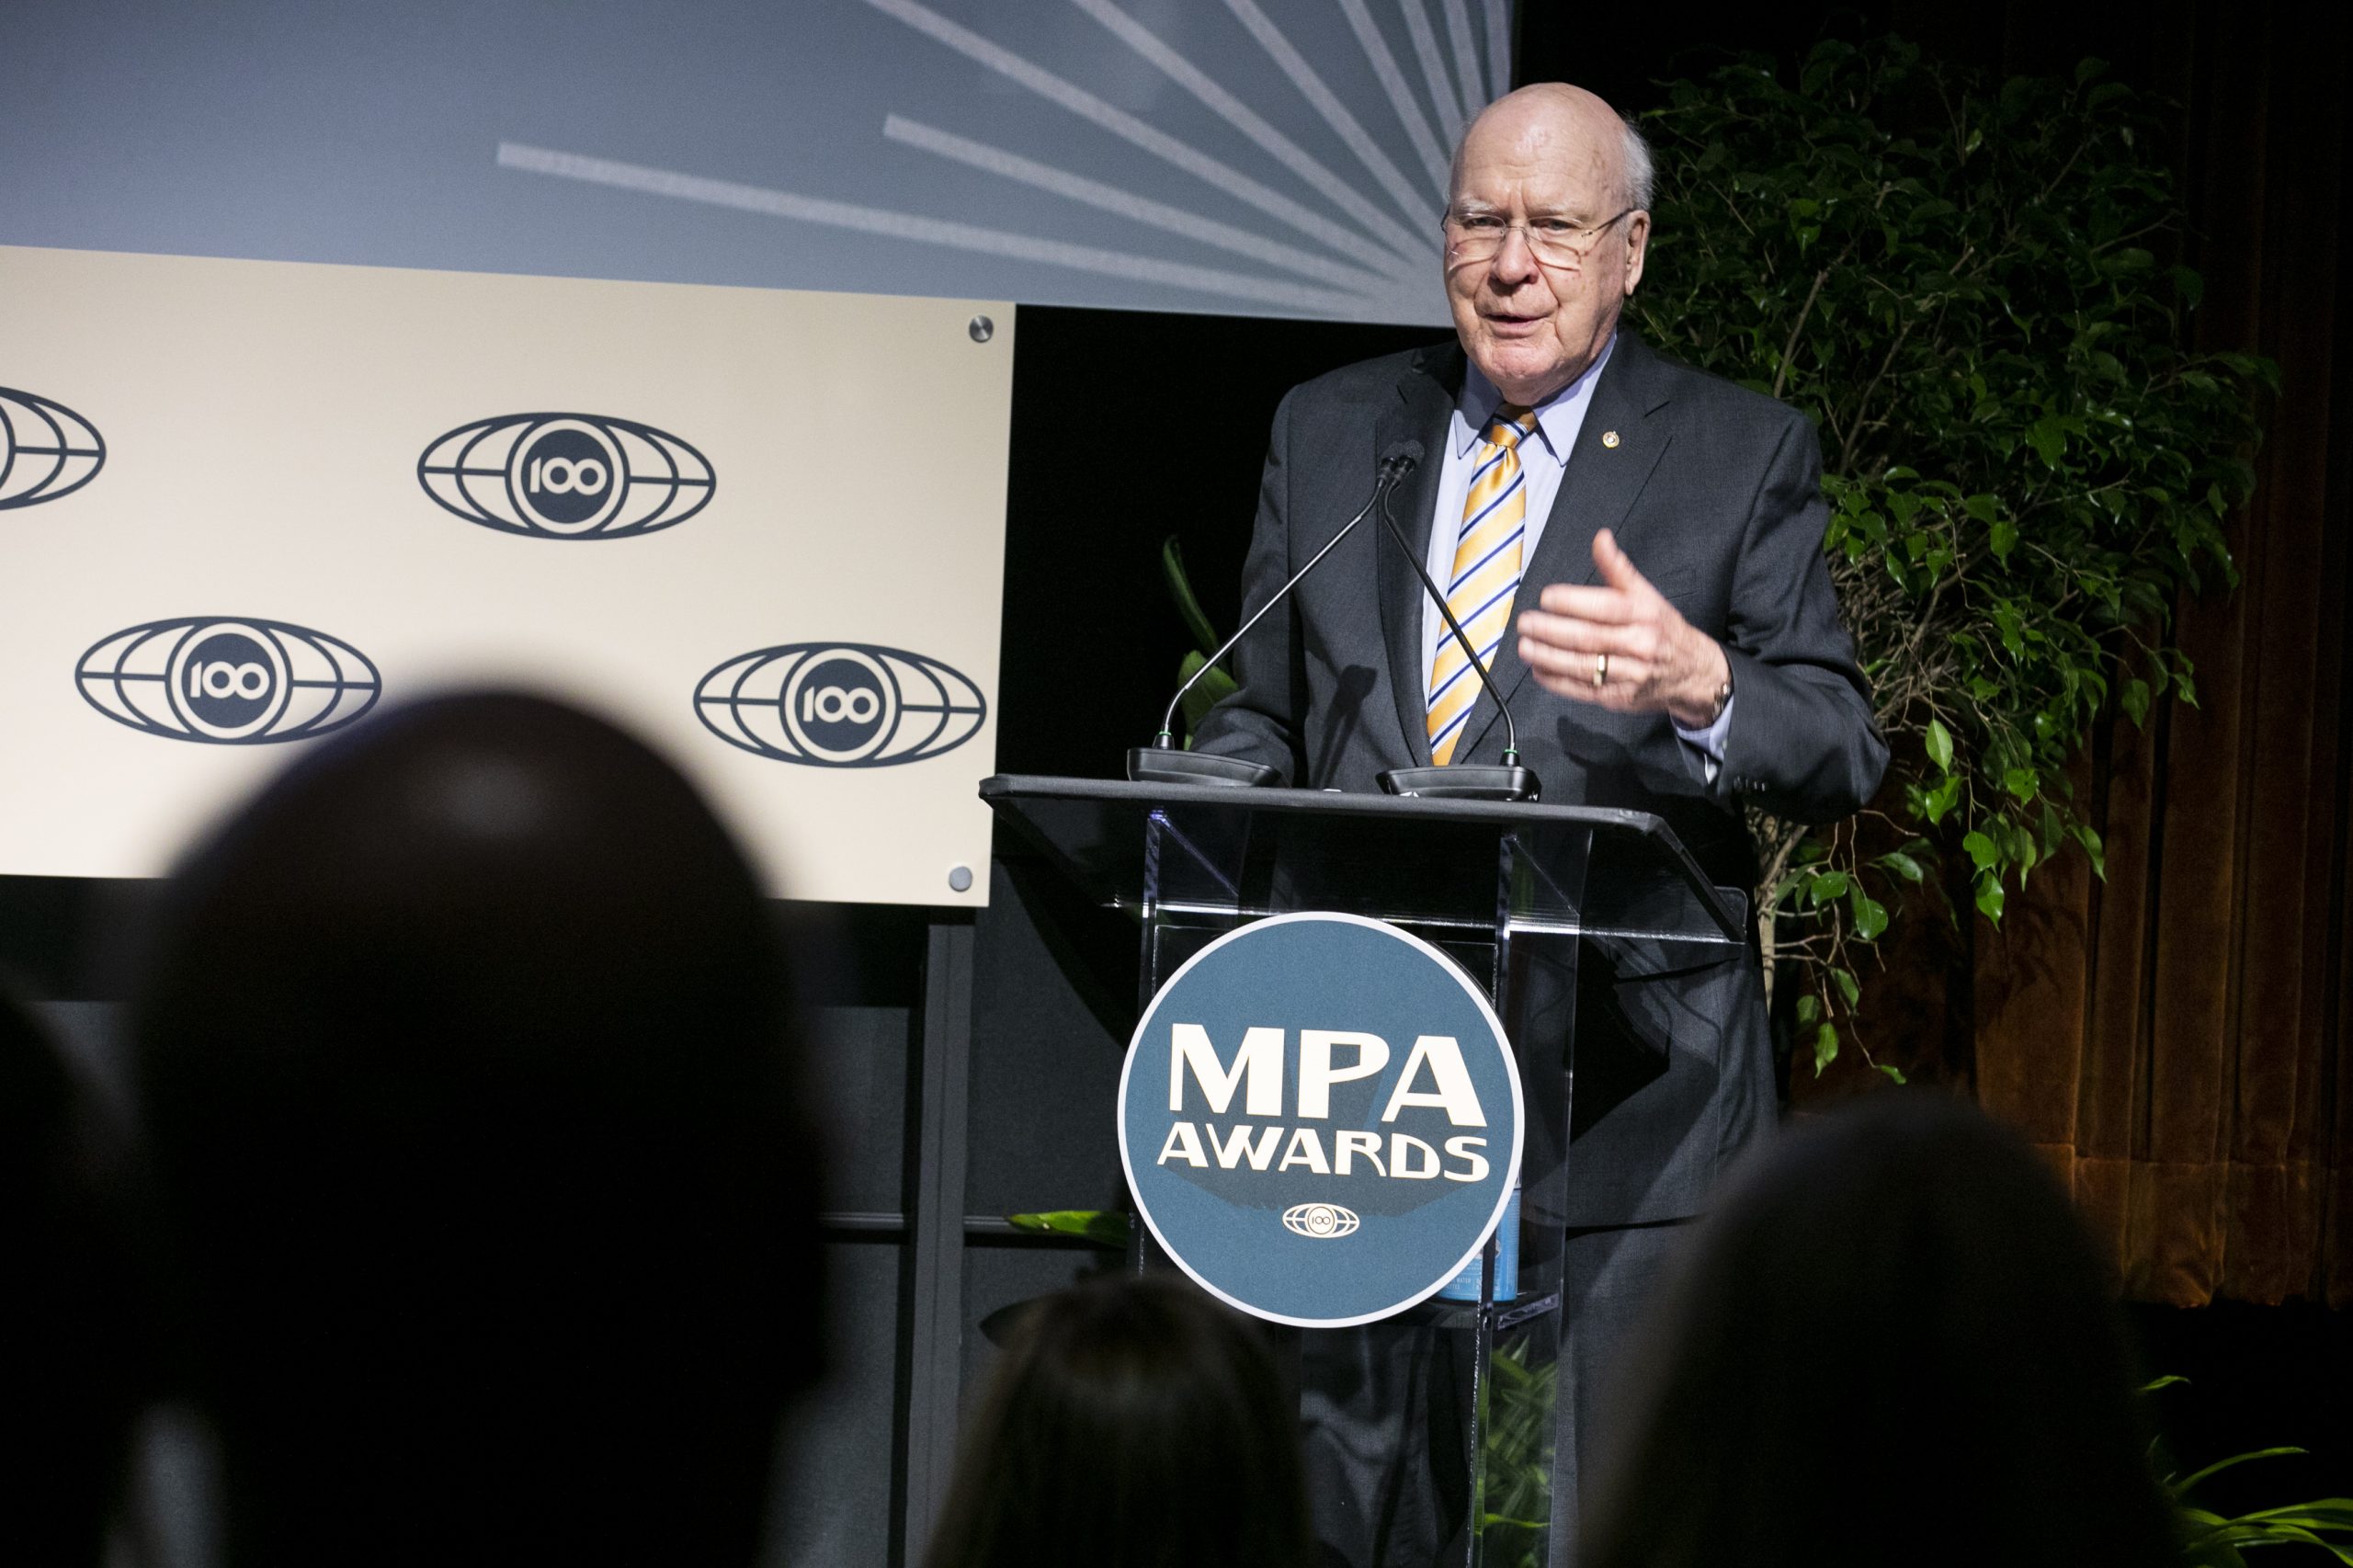 Senator Patrick Leahy (D-VT), recipient of the MPA Lifetime Achievement Award. (Credit: Kristoffer Tripplaar)